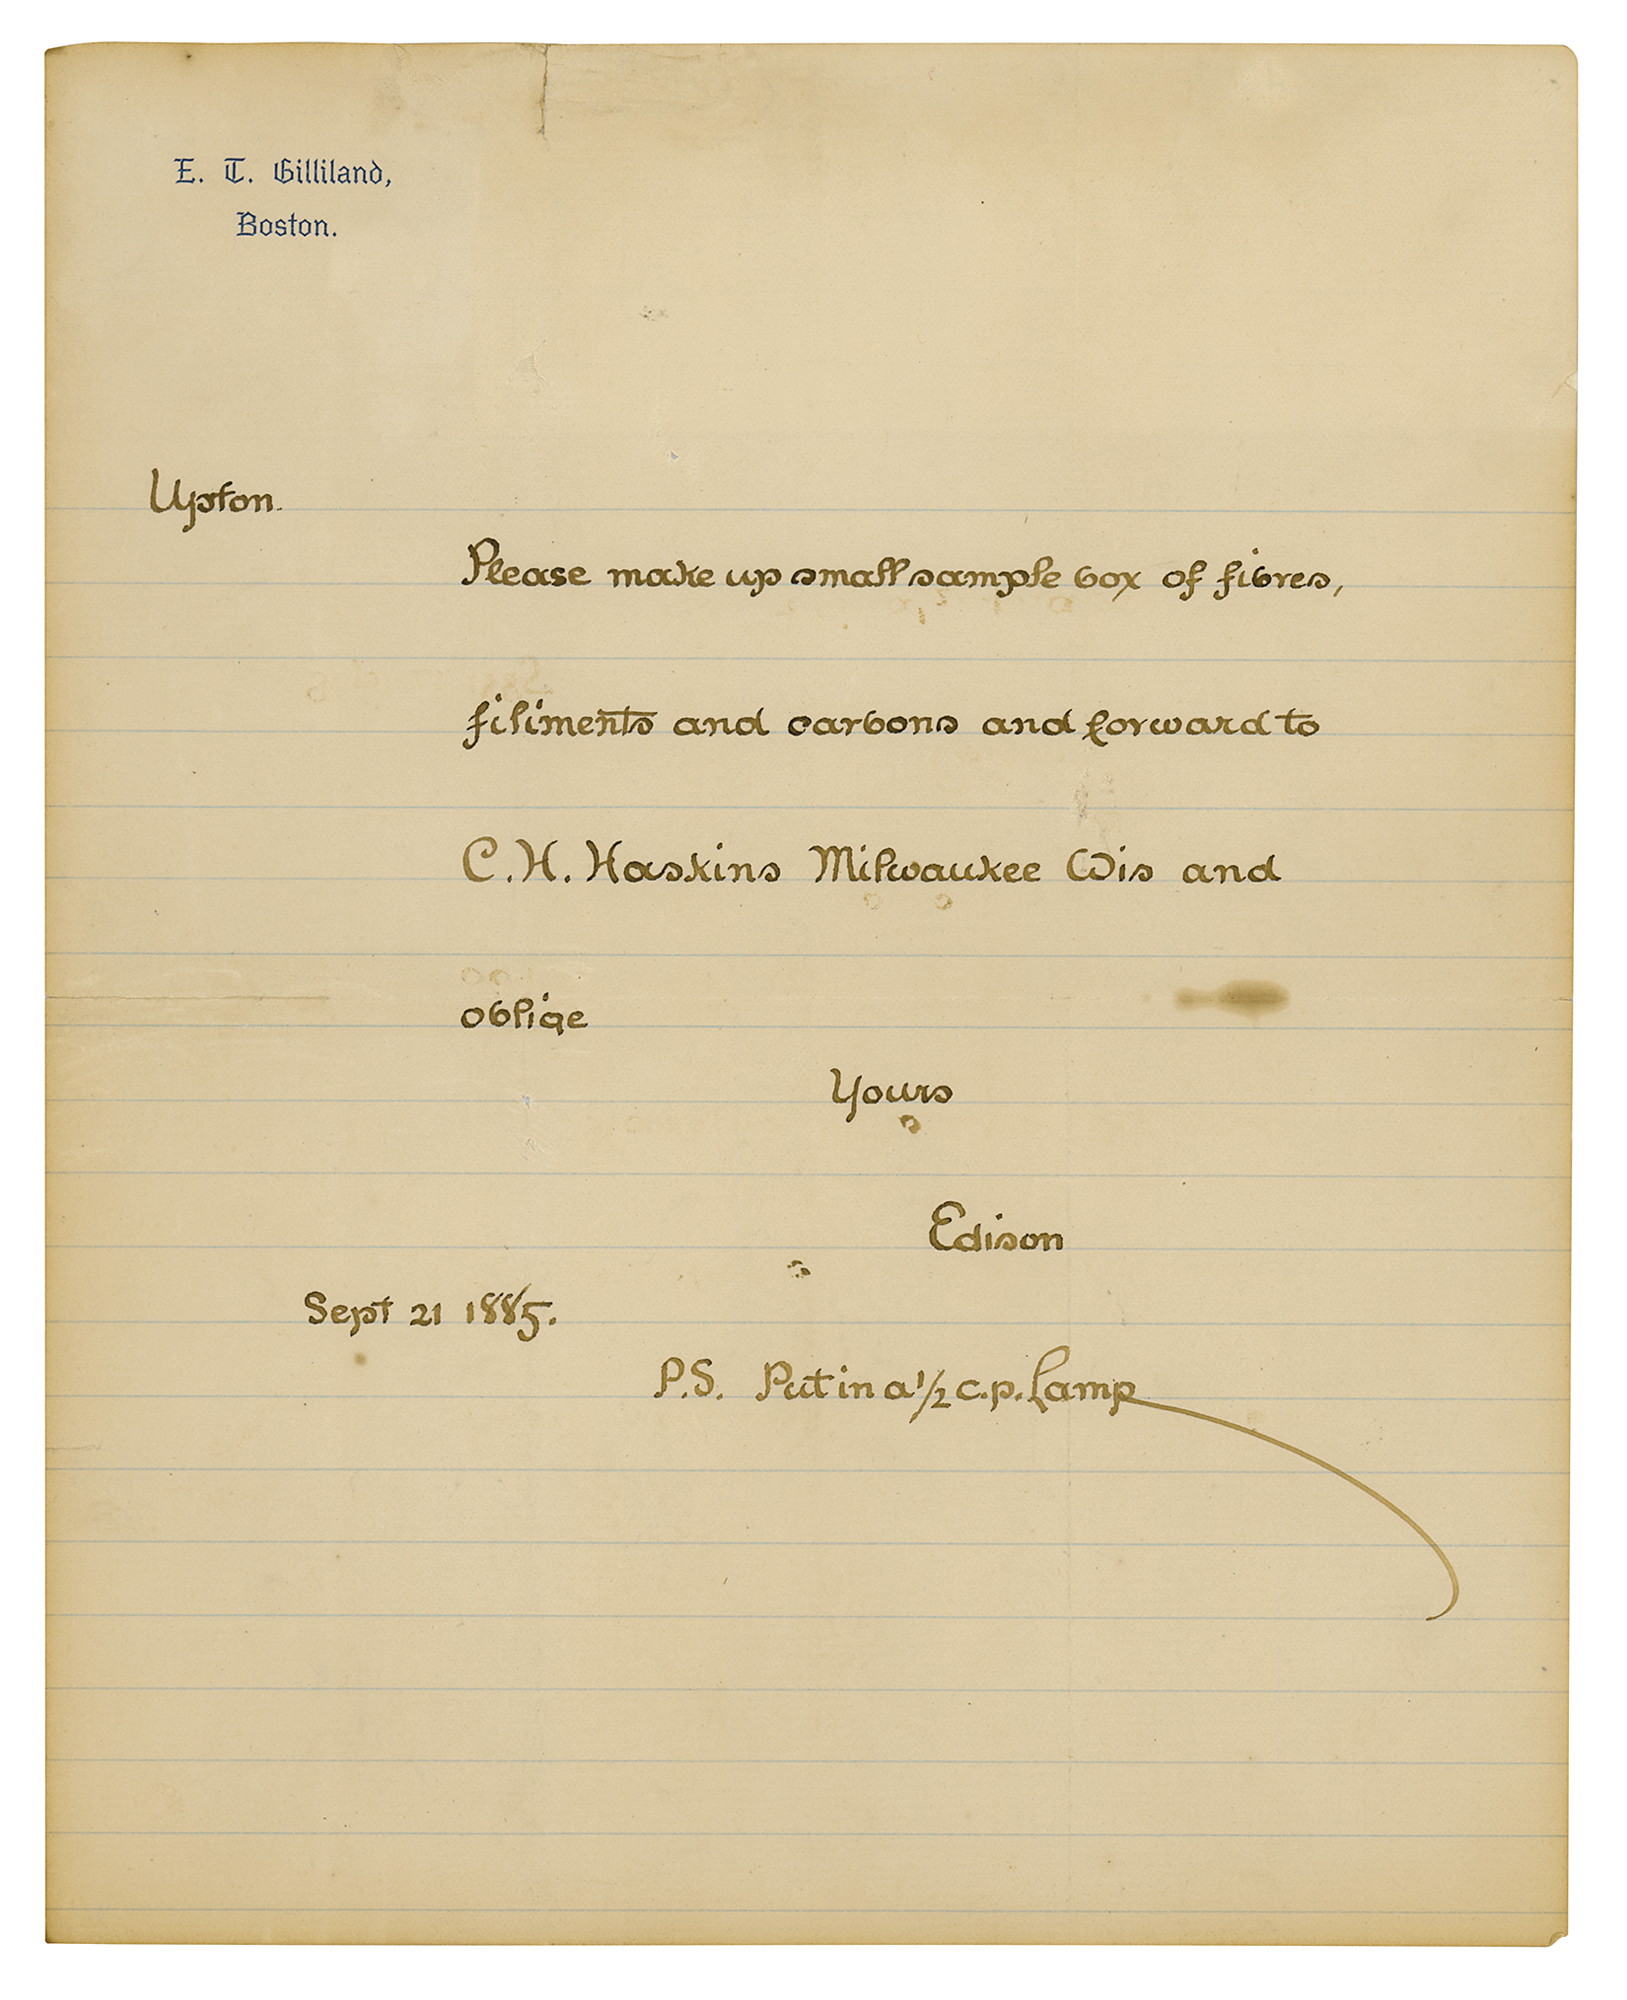 Lot #185 Thomas Edison Autograph Letter Signed on Filiments